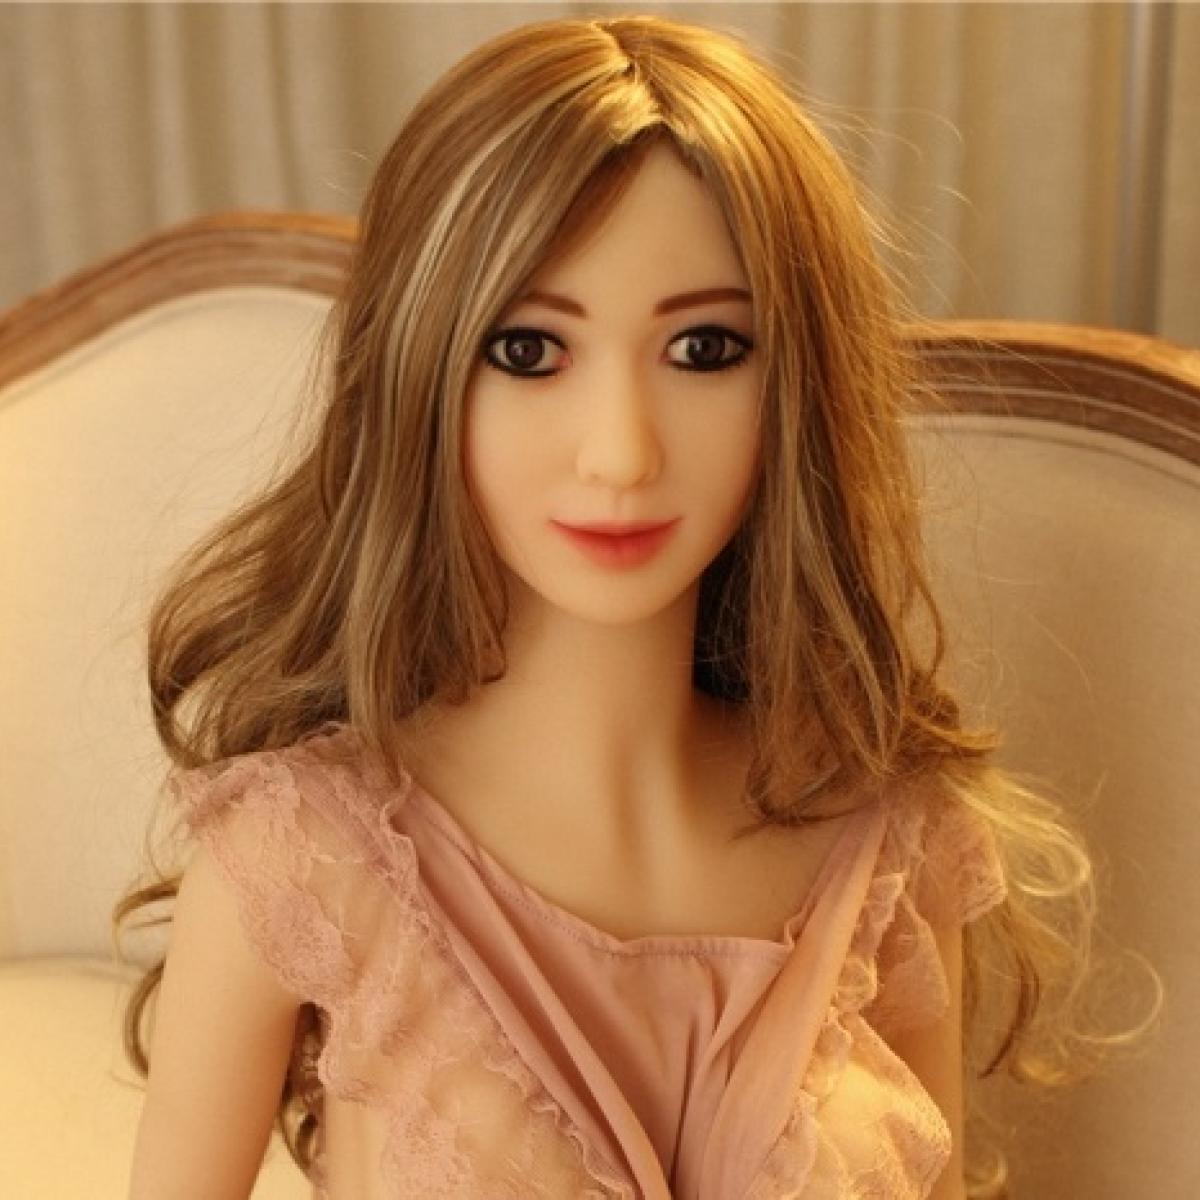 Neodoll Racy - Sandra - Sex Doll Head - M16 Compatible - Tan